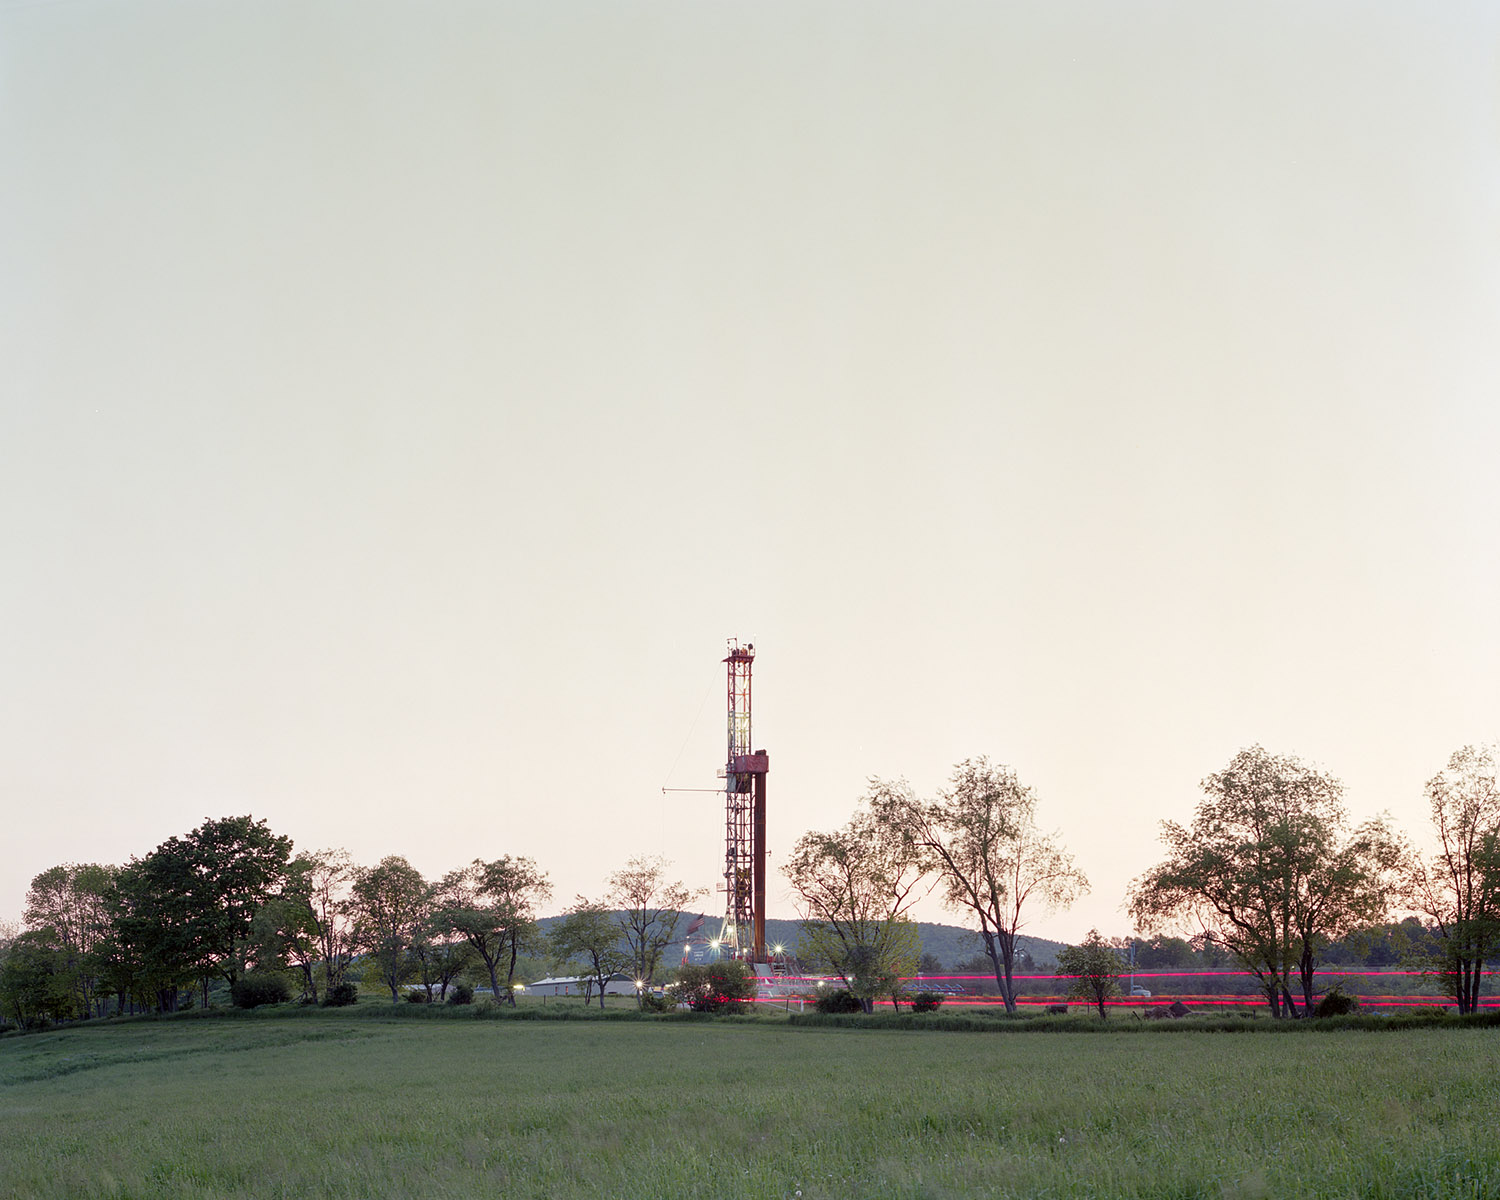  A Chesapeake Energy gas-drilling rig in Wyalusing, PA.&nbsp;   
  
 
  
  ©  
  
 Normal 
 0 
 
 
 
 
 false 
 false 
 false 
 
 EN-US 
 X-NONE 
 X-NONE 
 
  
  
  
  
  
  
  
  
  
 
 
  
  
  
  
  
  
  
  
  
  
  
  
    
  
 
 
 
 
 
 
 
 
 
